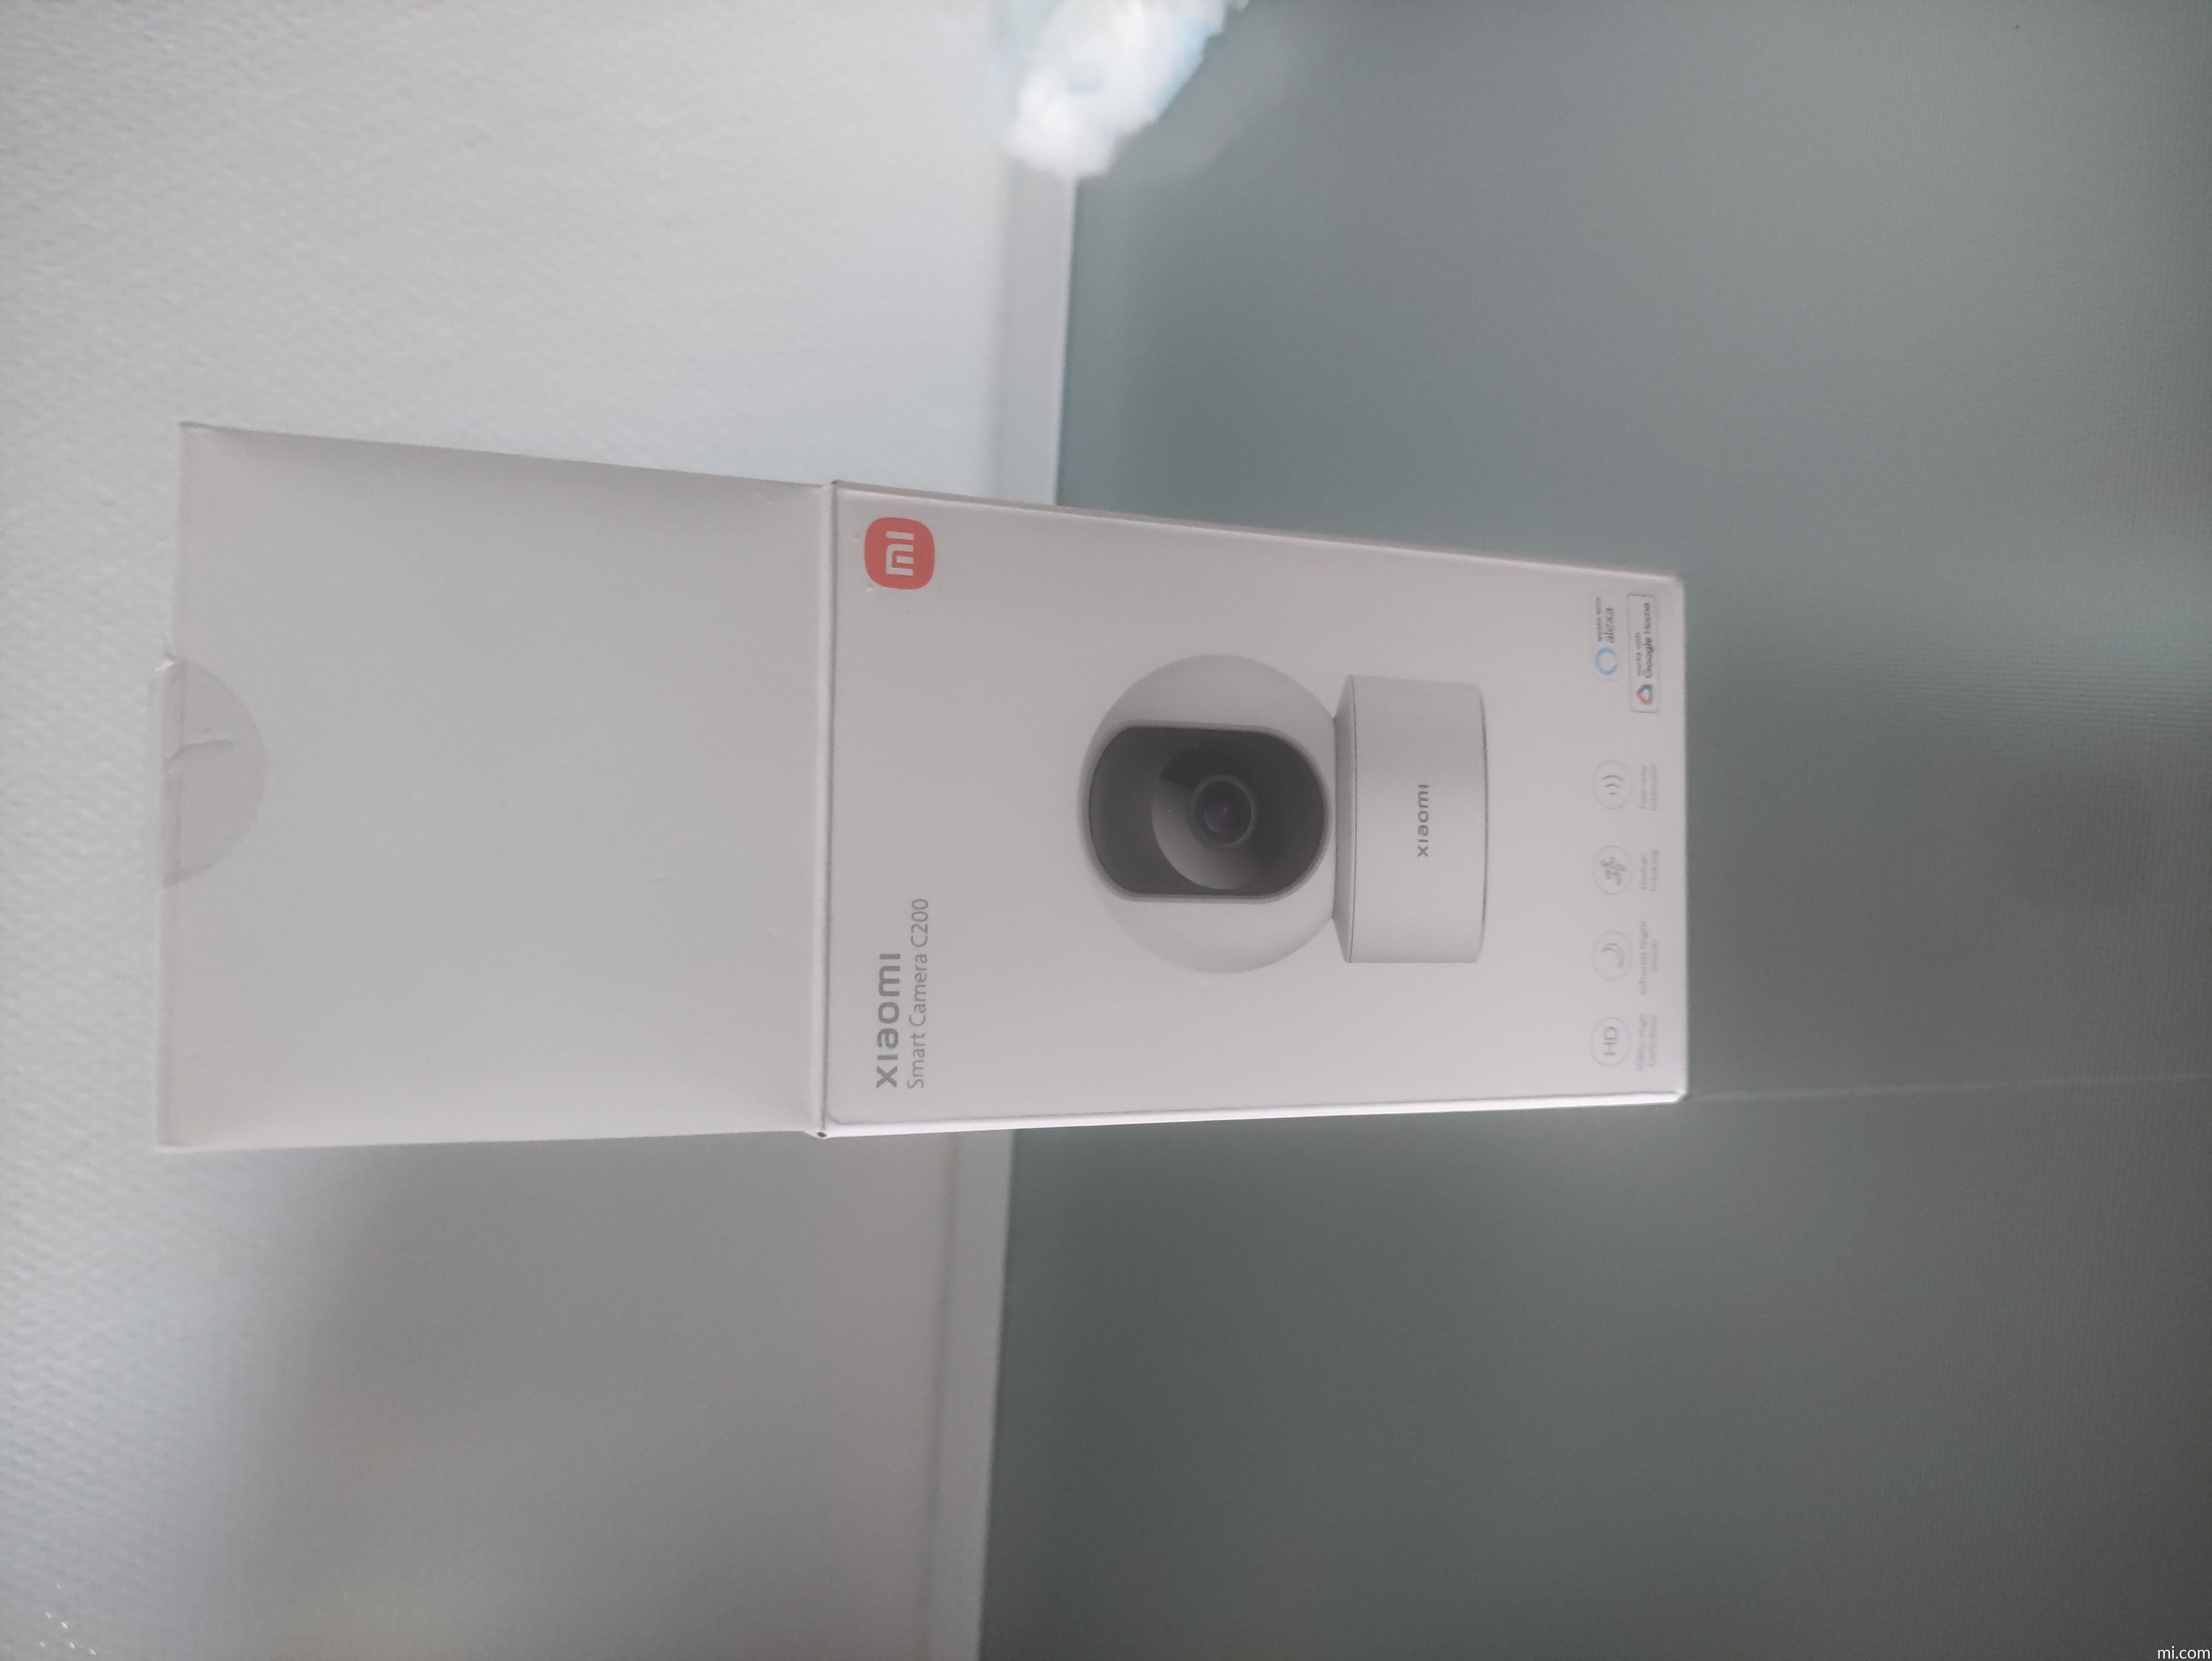 XIAOMI MI Camera De Surveillance Connectee 1080P (c200) Wifi 360